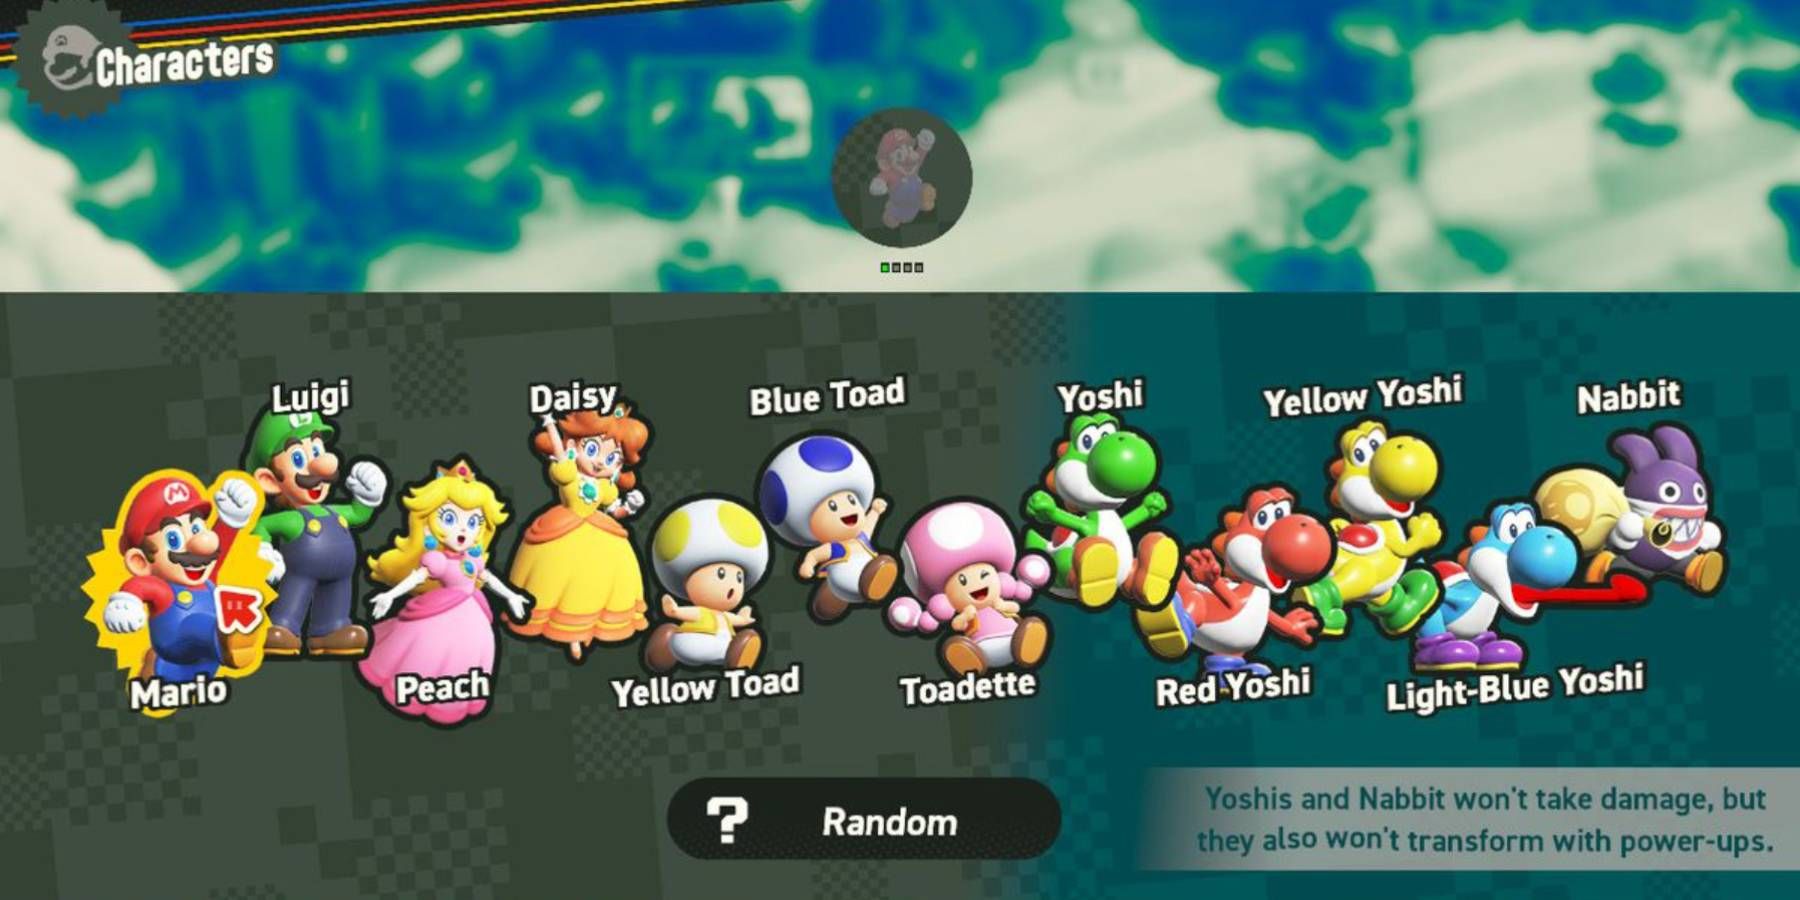 Character Select screen from Super Mario Bros. Wonder